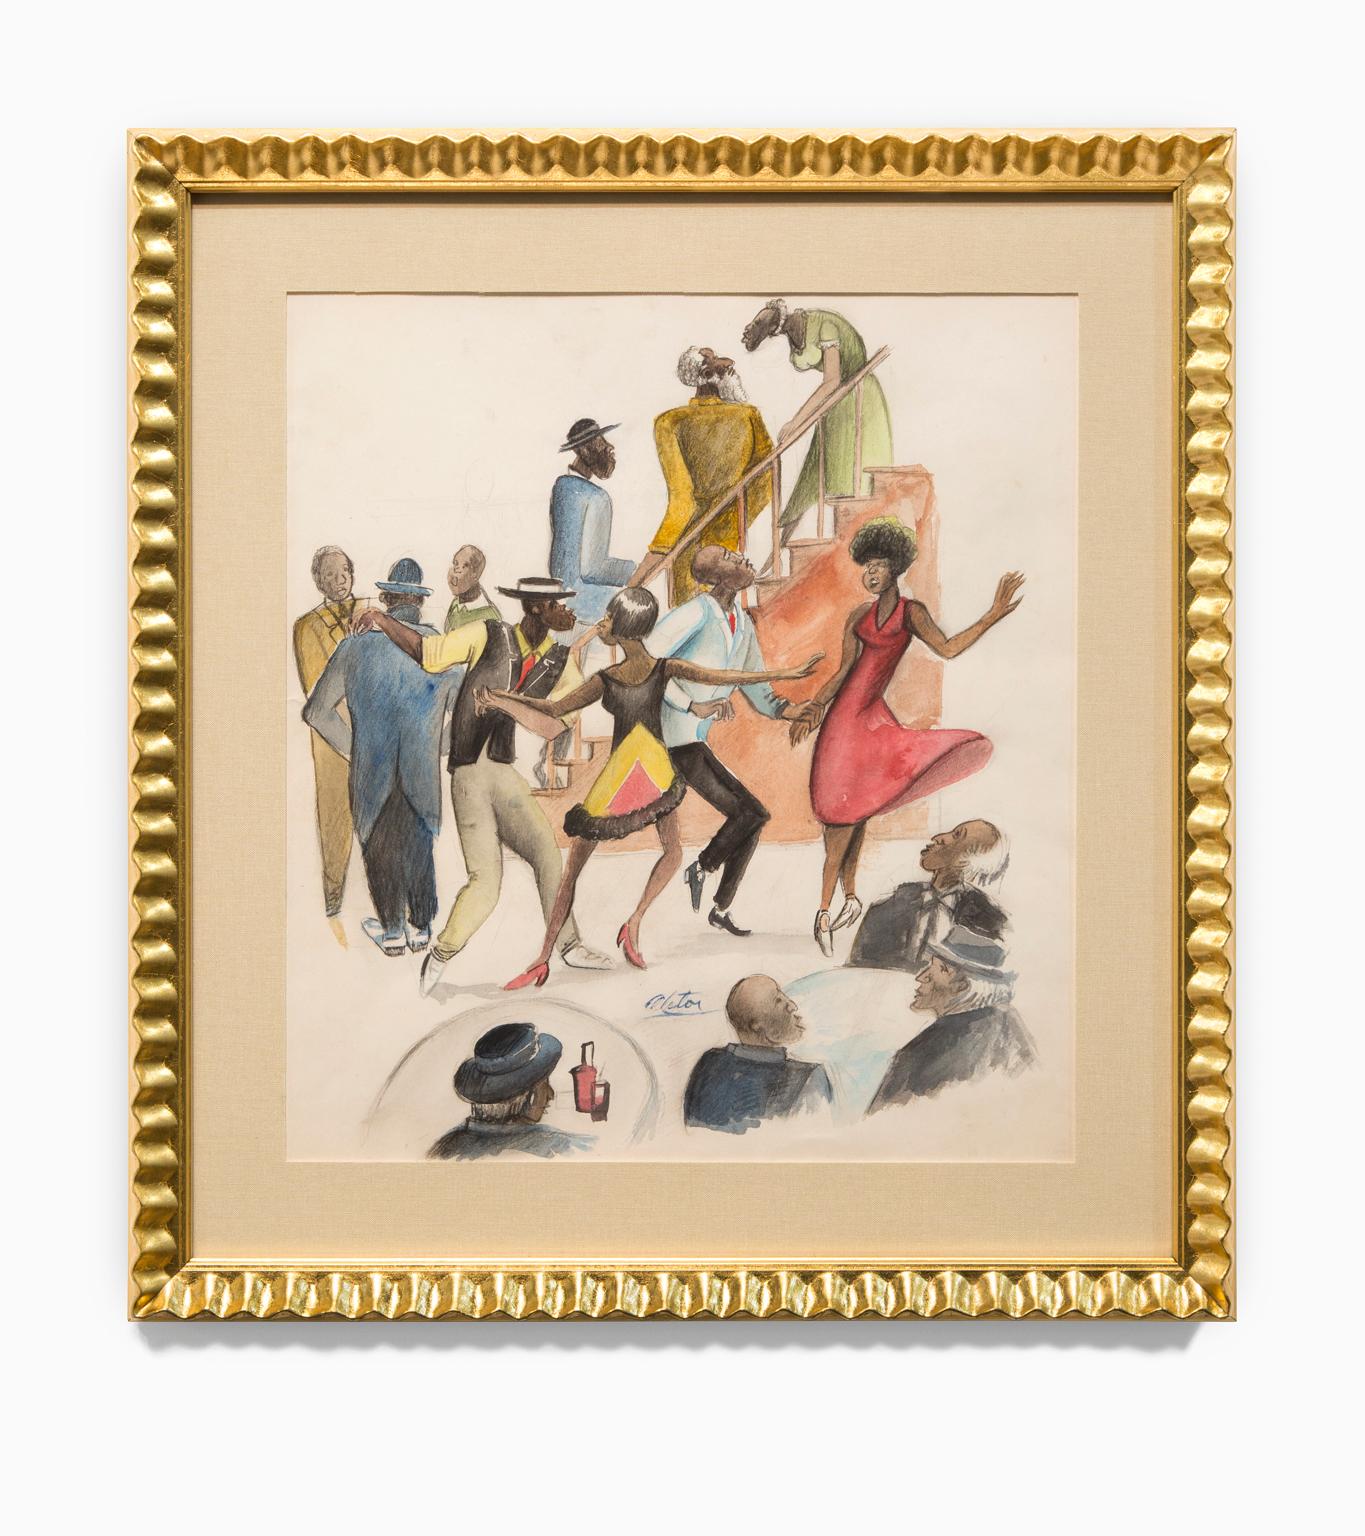 Charles Alston Figurative Painting - "Saturday Night" Local Genre, Figurative, Dance, Harlem Renaissance, Signed